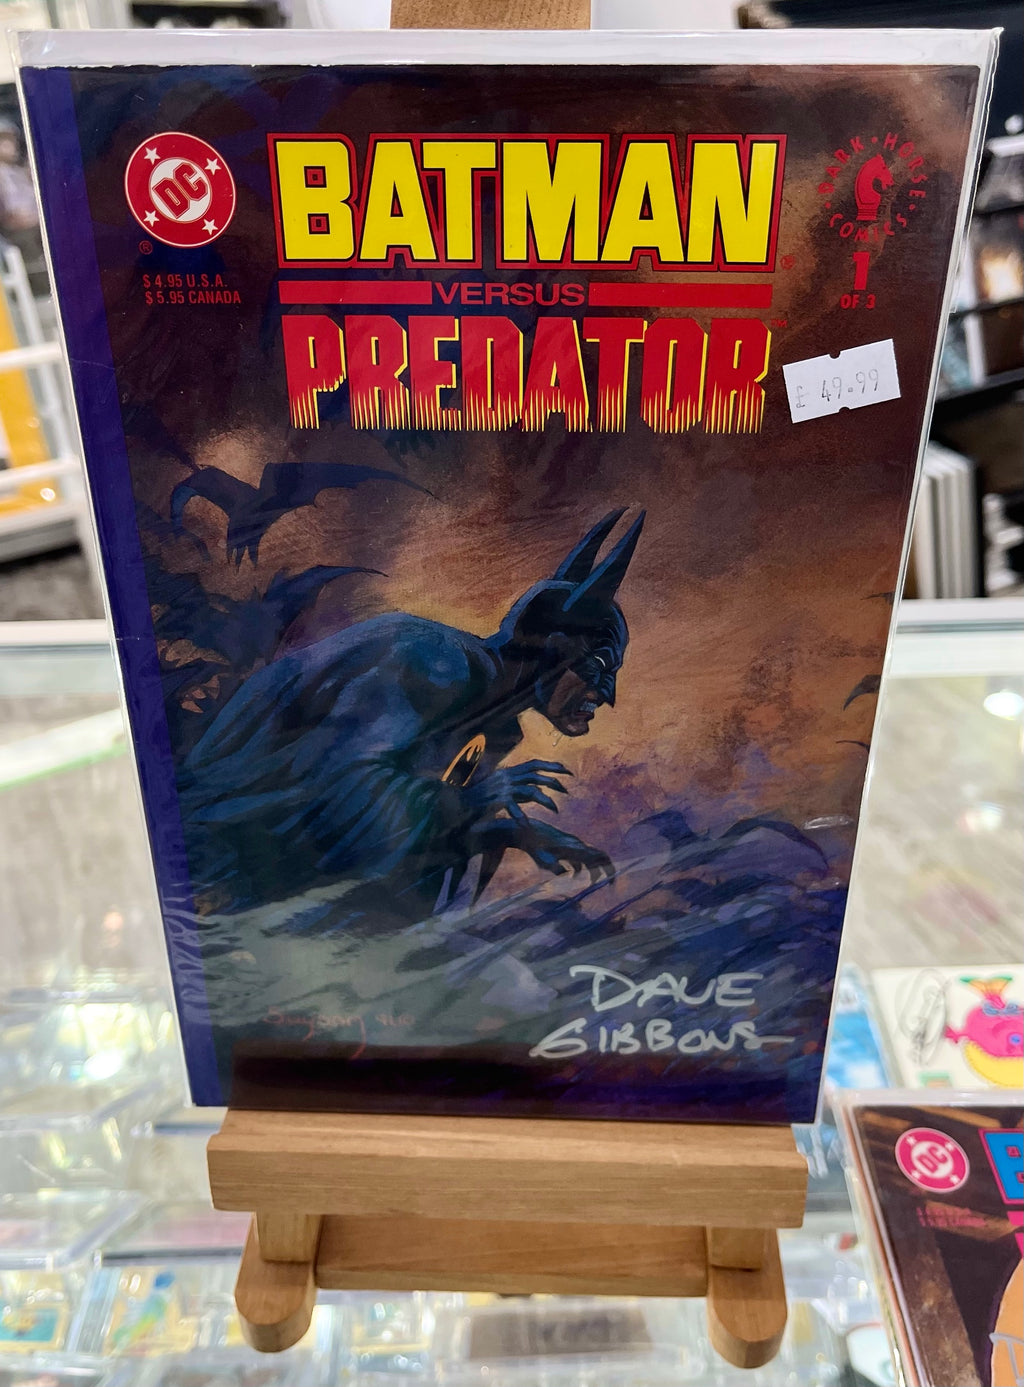 Batman versus Predator Dave Gibbons Autographed DC Comics with COA